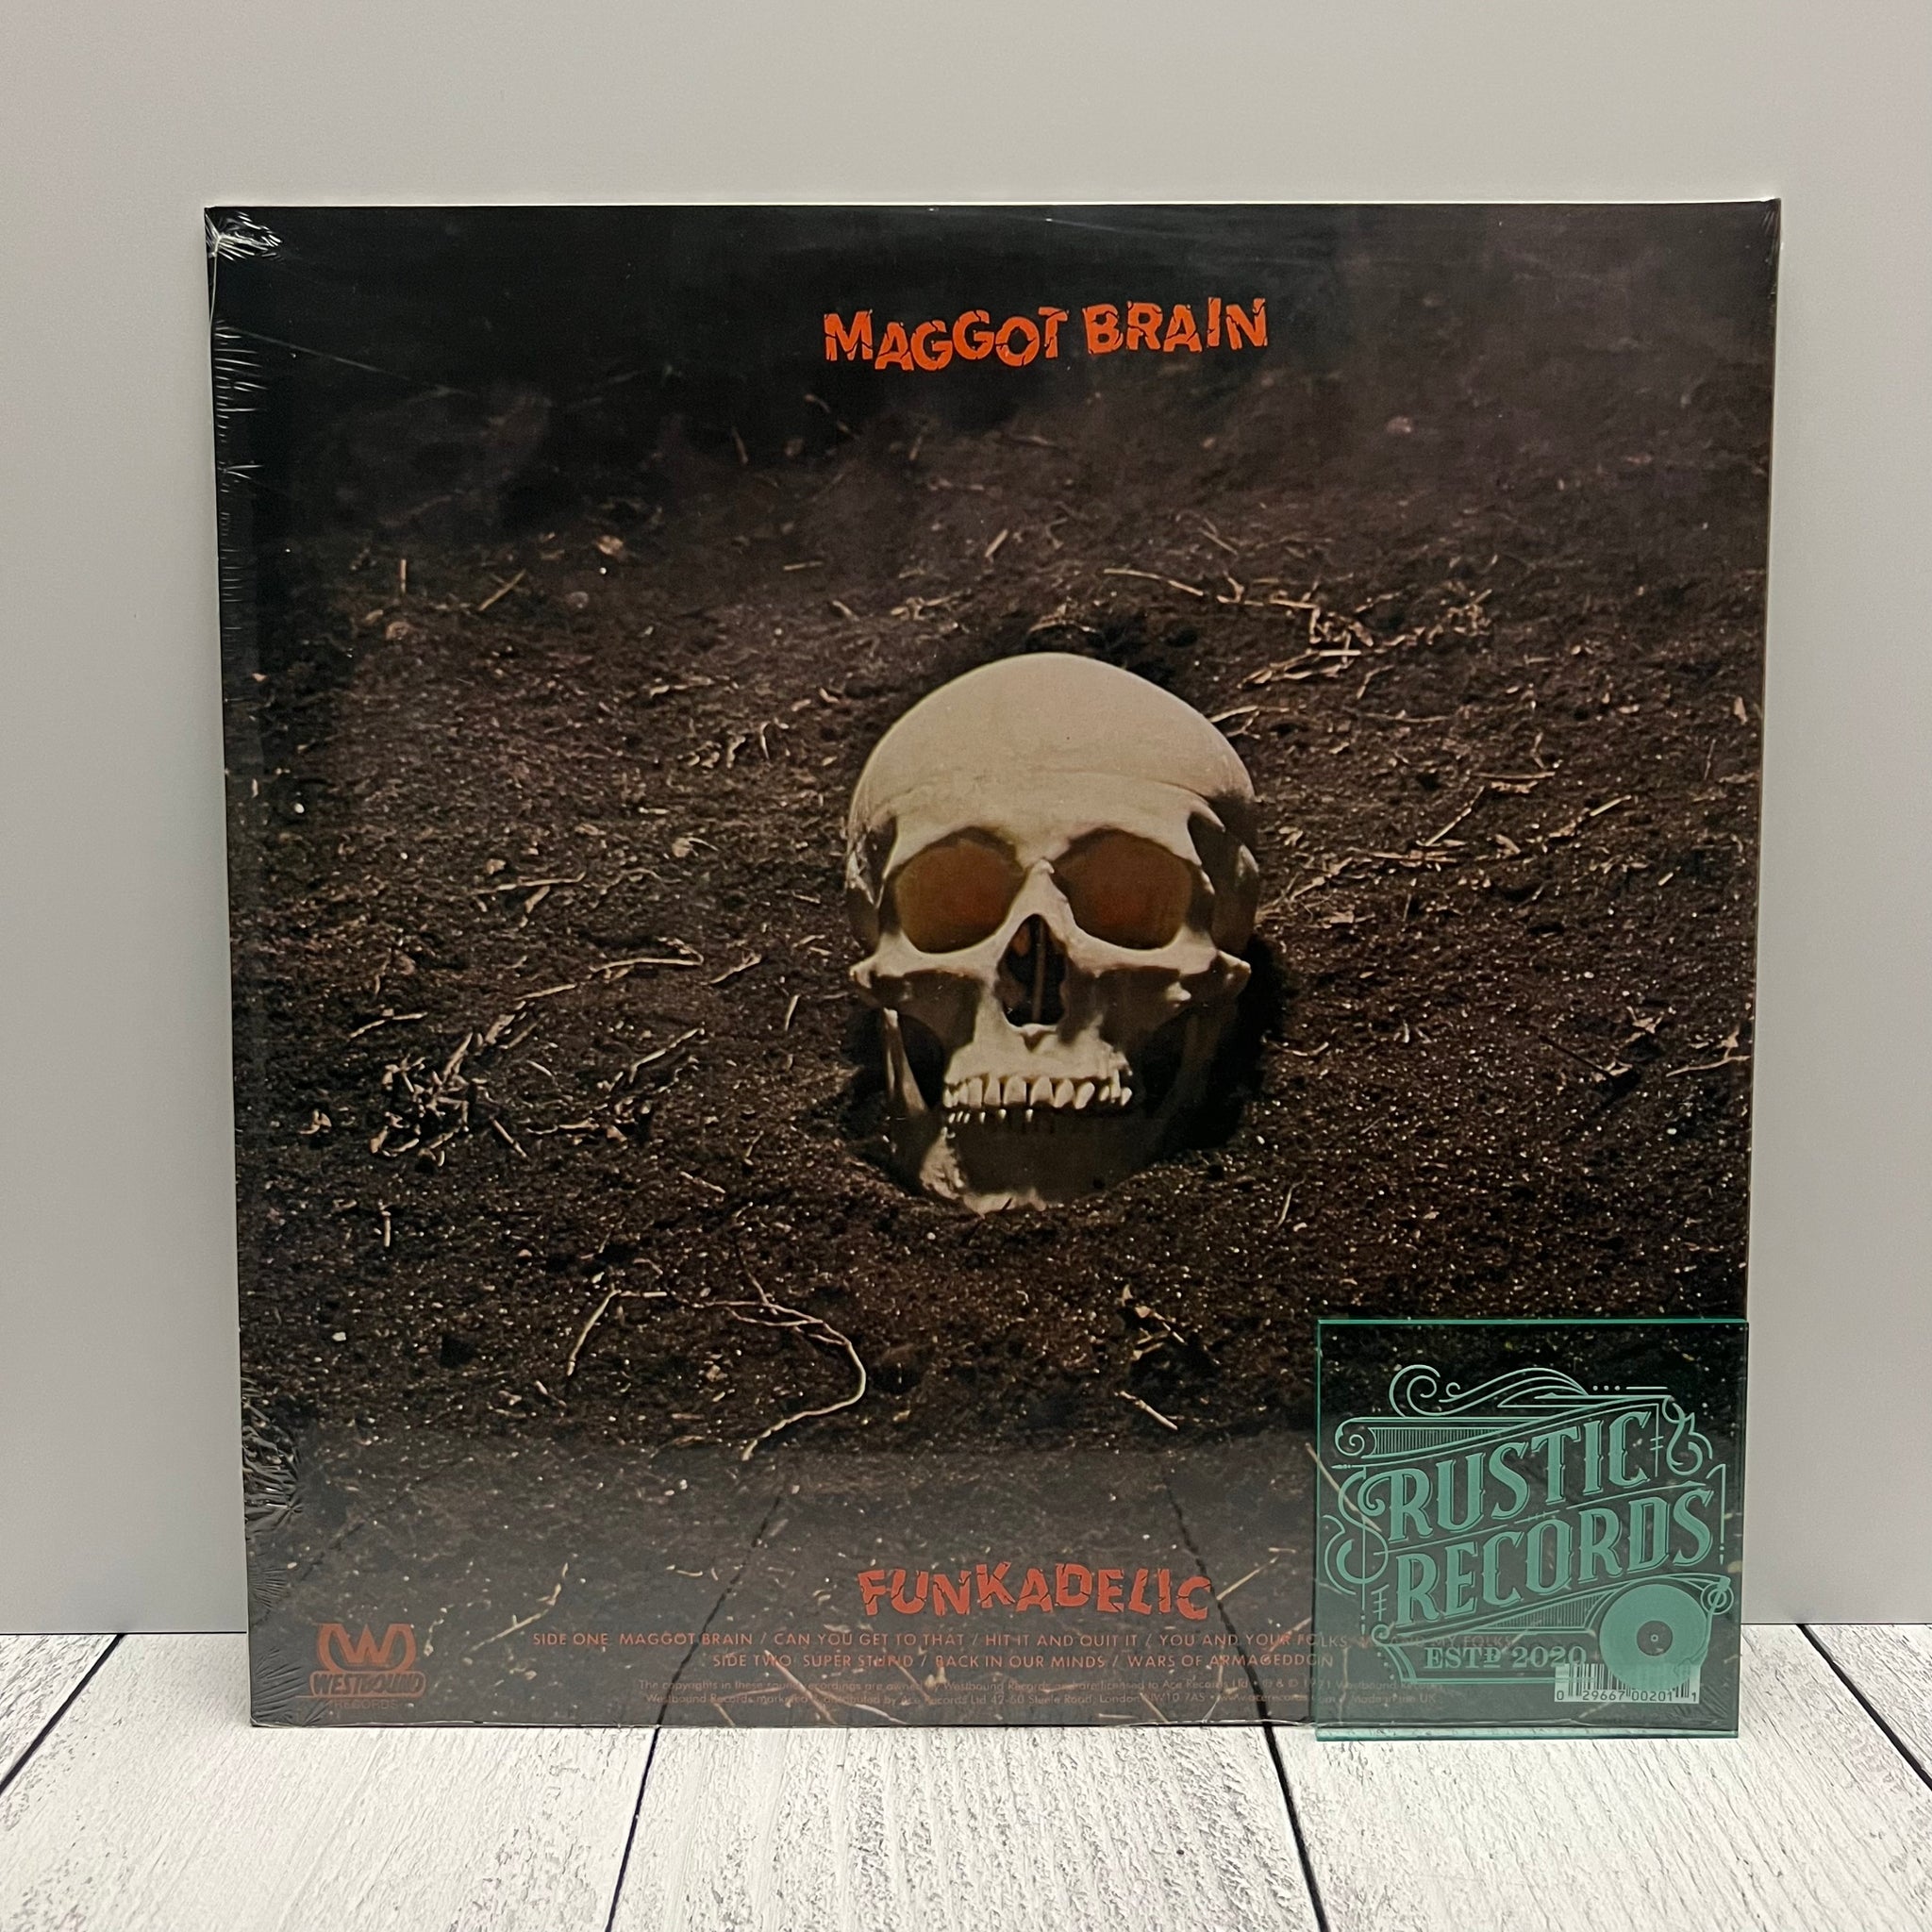 Funkadelic - Maggot Brain (Black Vinyl)